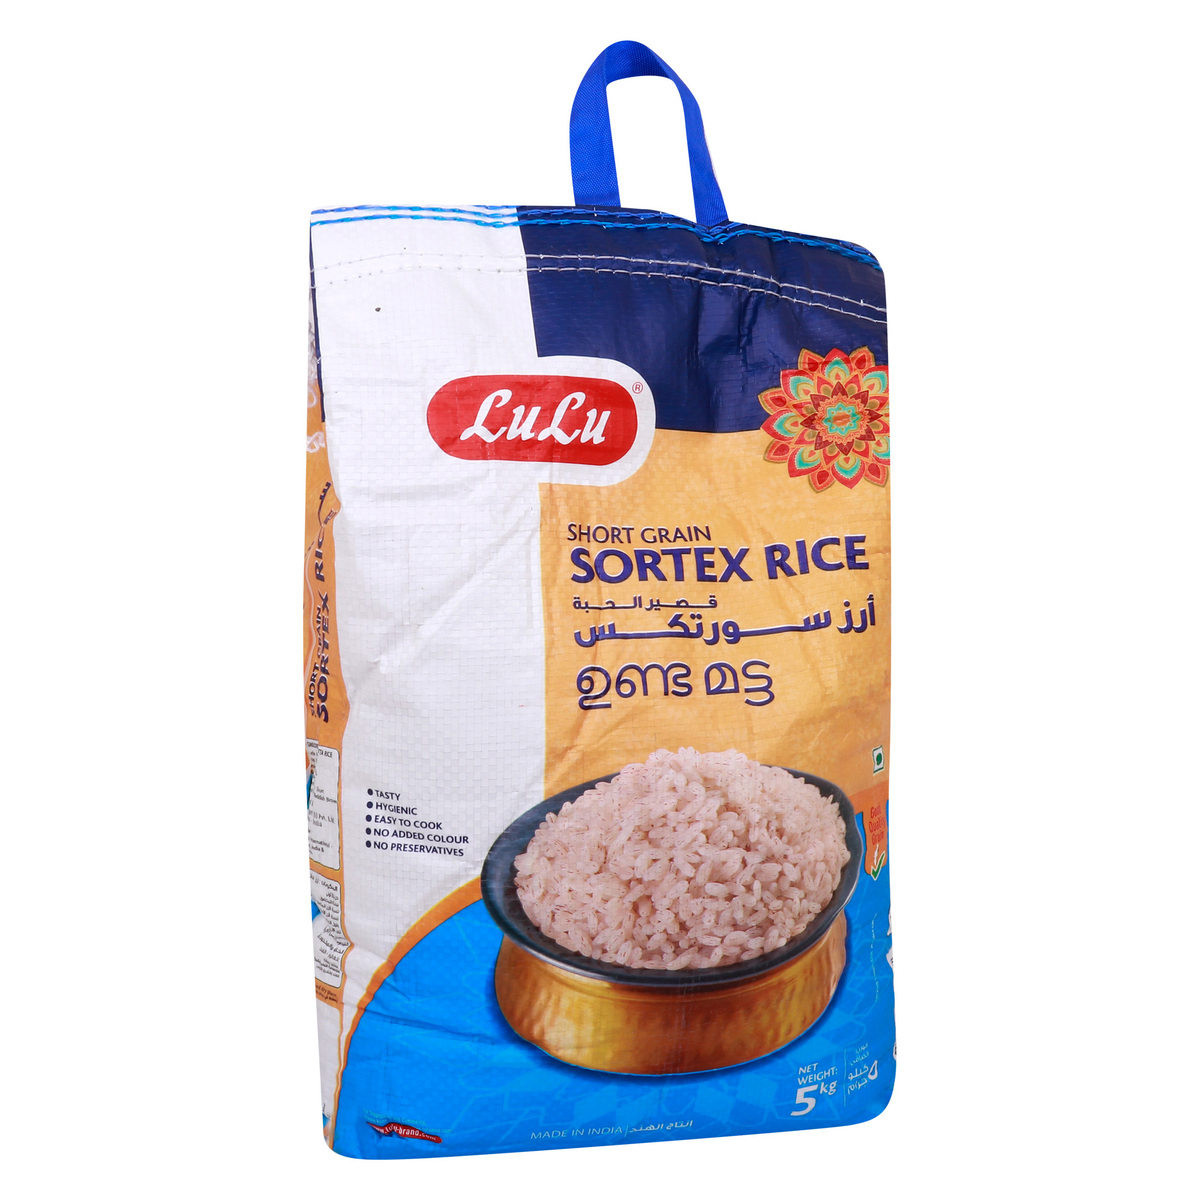 LuLu Short Grain Matta Rice 5 kg